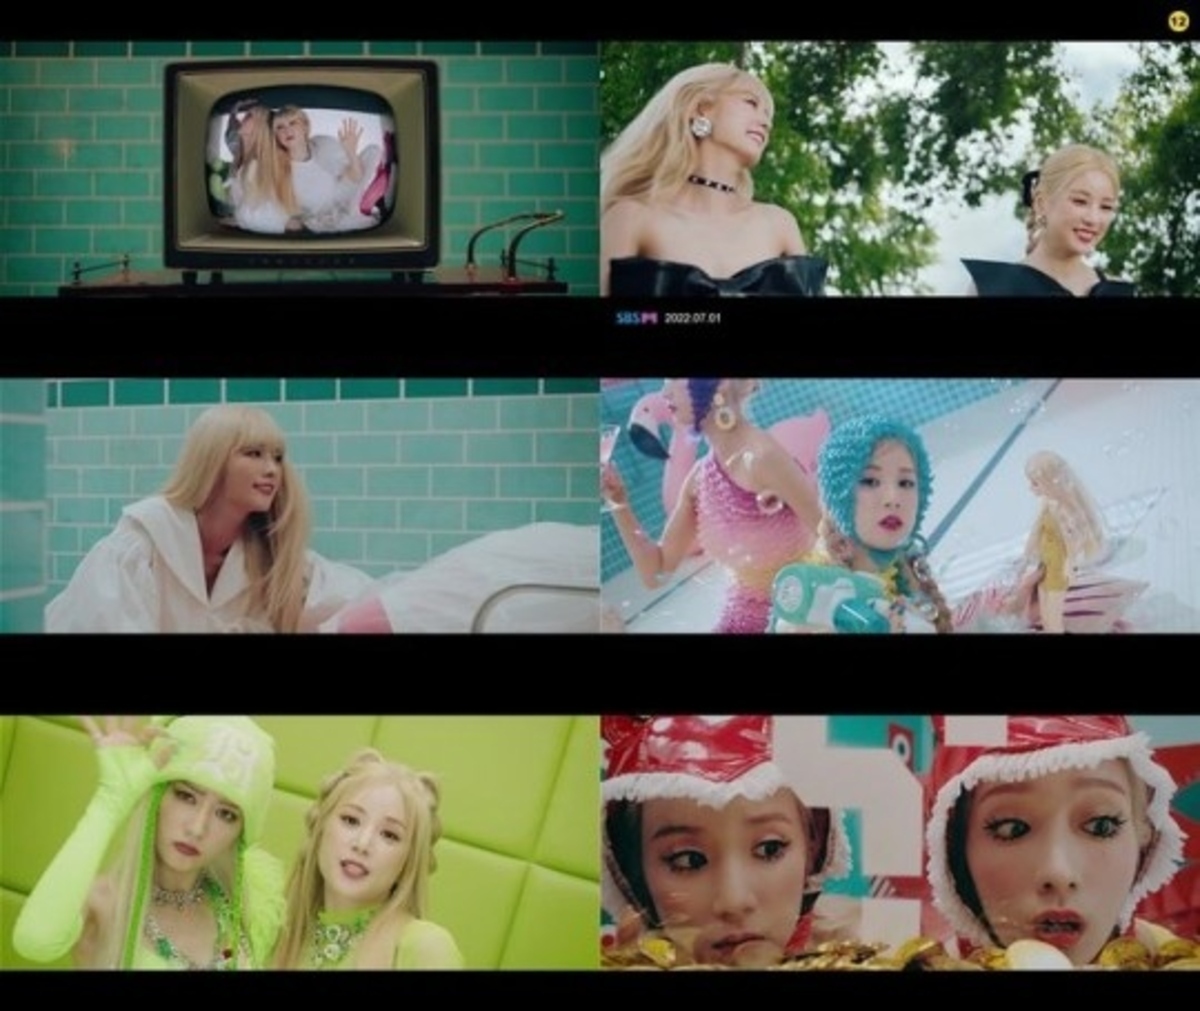 “Apink パク・チョロン＆ユン・ボミのユニット”CHOBOM、1stシングル「Copycat」MV予告映像を公開（Kstyle） – Yahoo!ニュース – Yahoo!ニュース